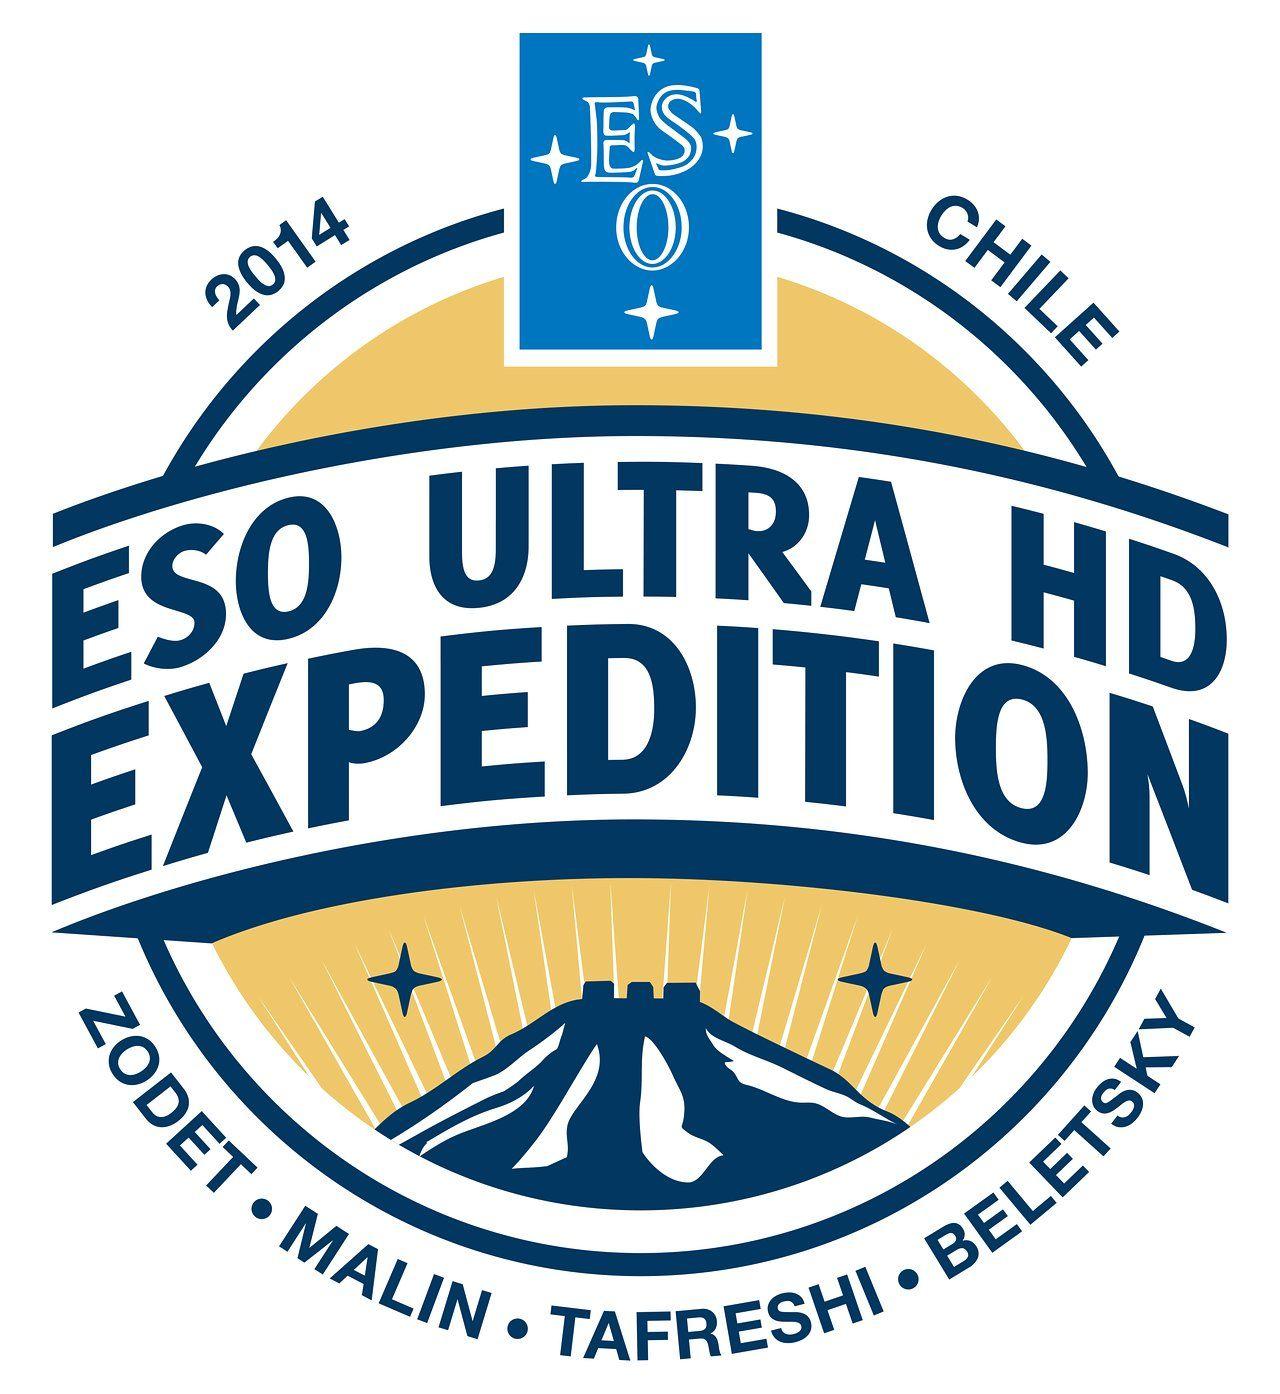 Expedition Logo - ESO Ultra HD Expedition logo | ESO